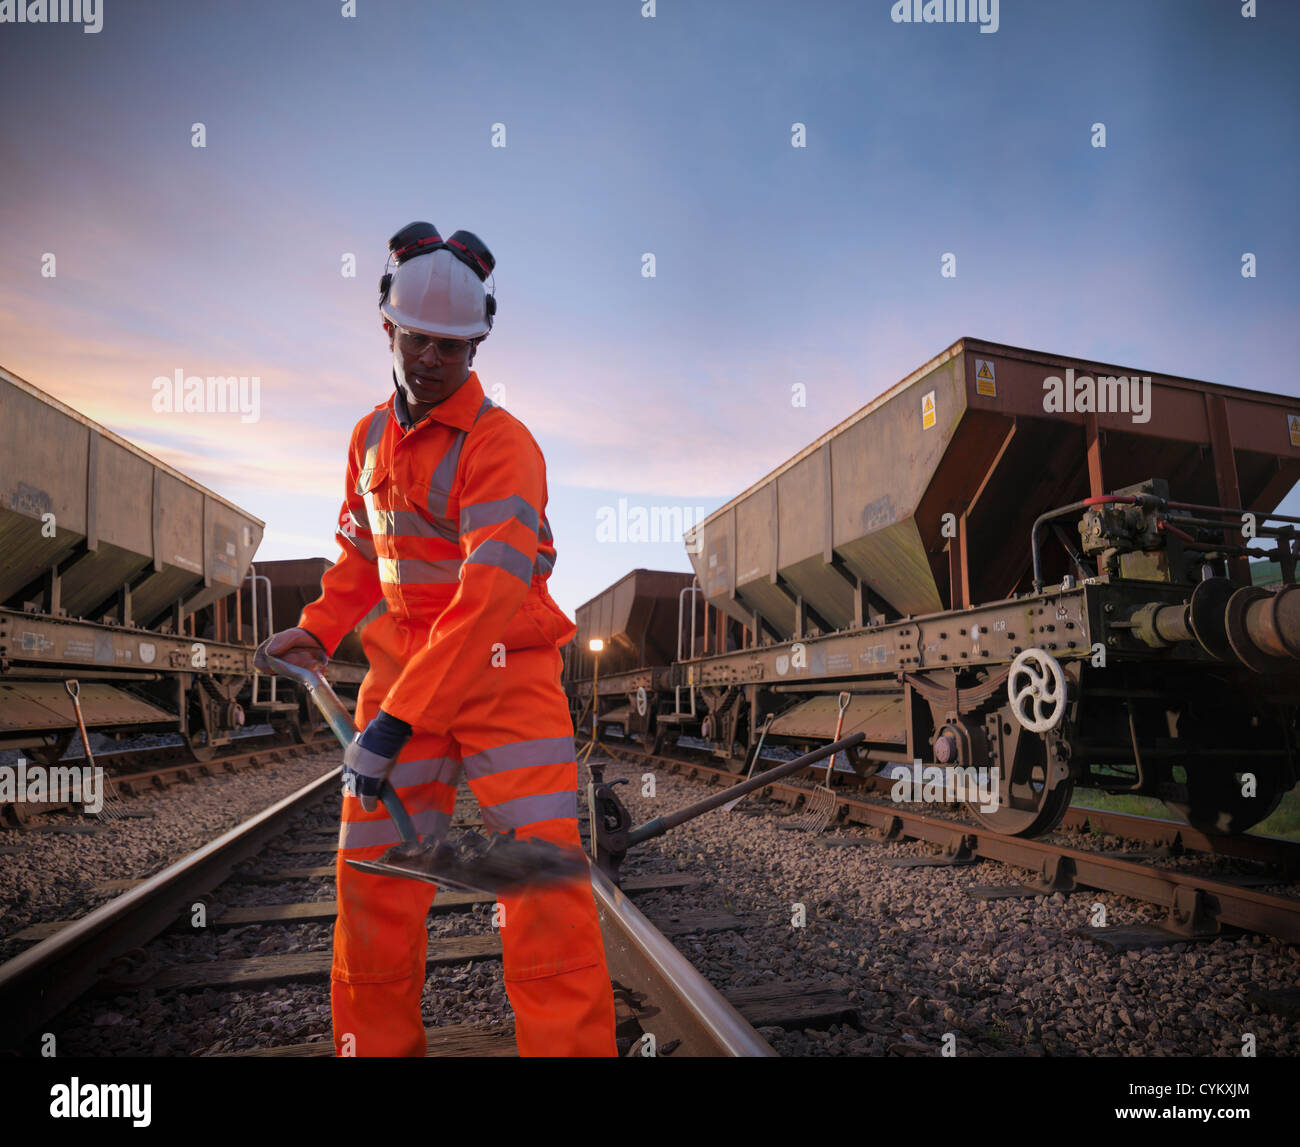 Railway worker shoveling on train tracks Stock Photo